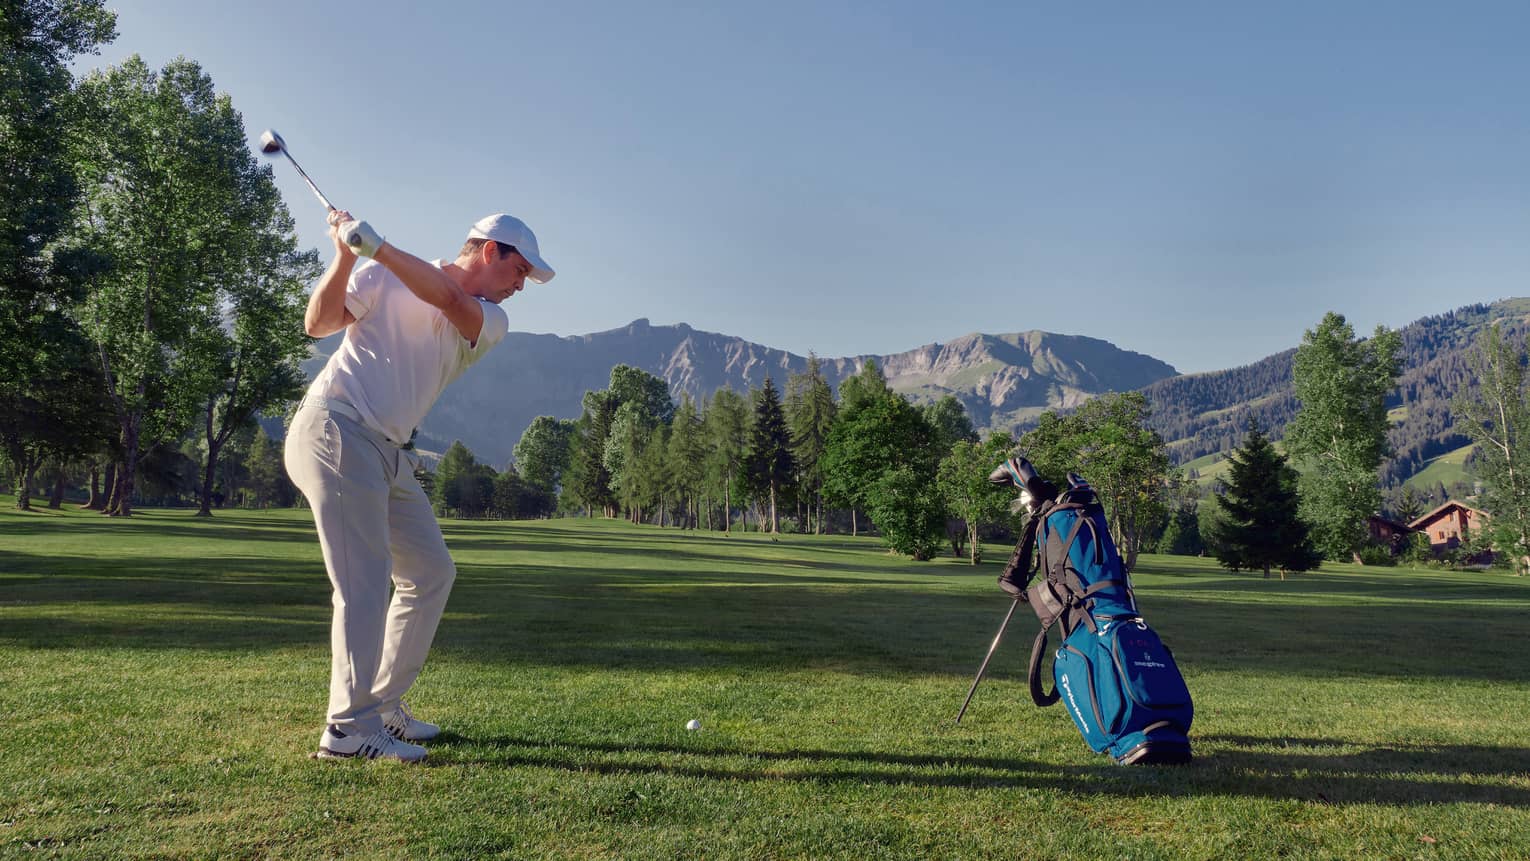 Man on mountainside golf course swings to hit golf ball beside blue golf bag